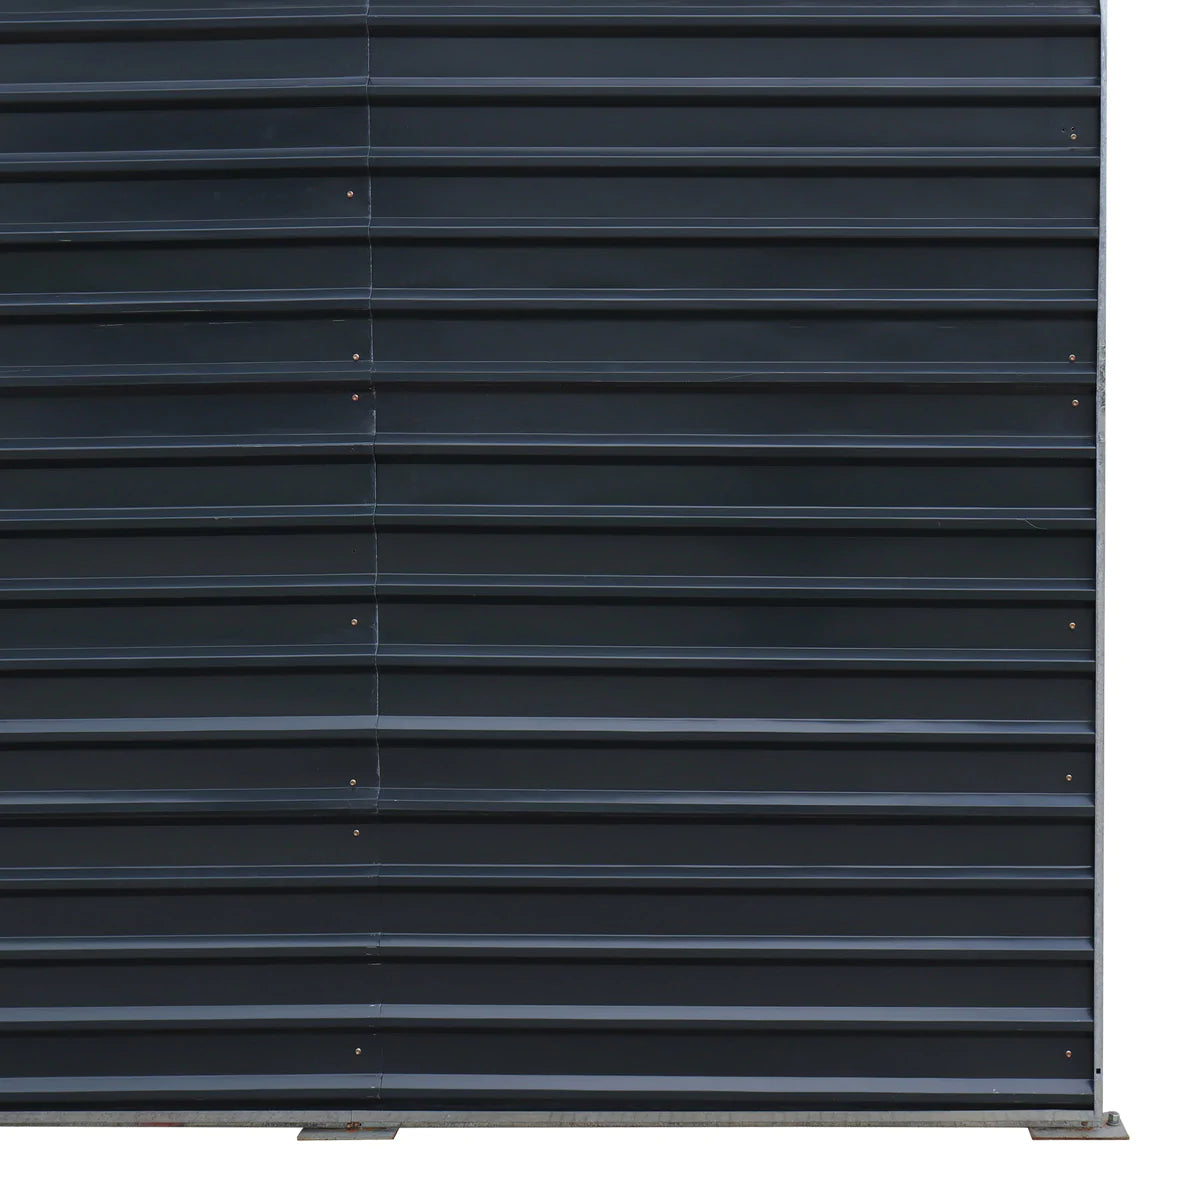 New 20’ x 30’ Metal Shed Carport, 10’ Enclosed Sidewalls, 600 Sq-Ft, 27 GA Corrugated Panels